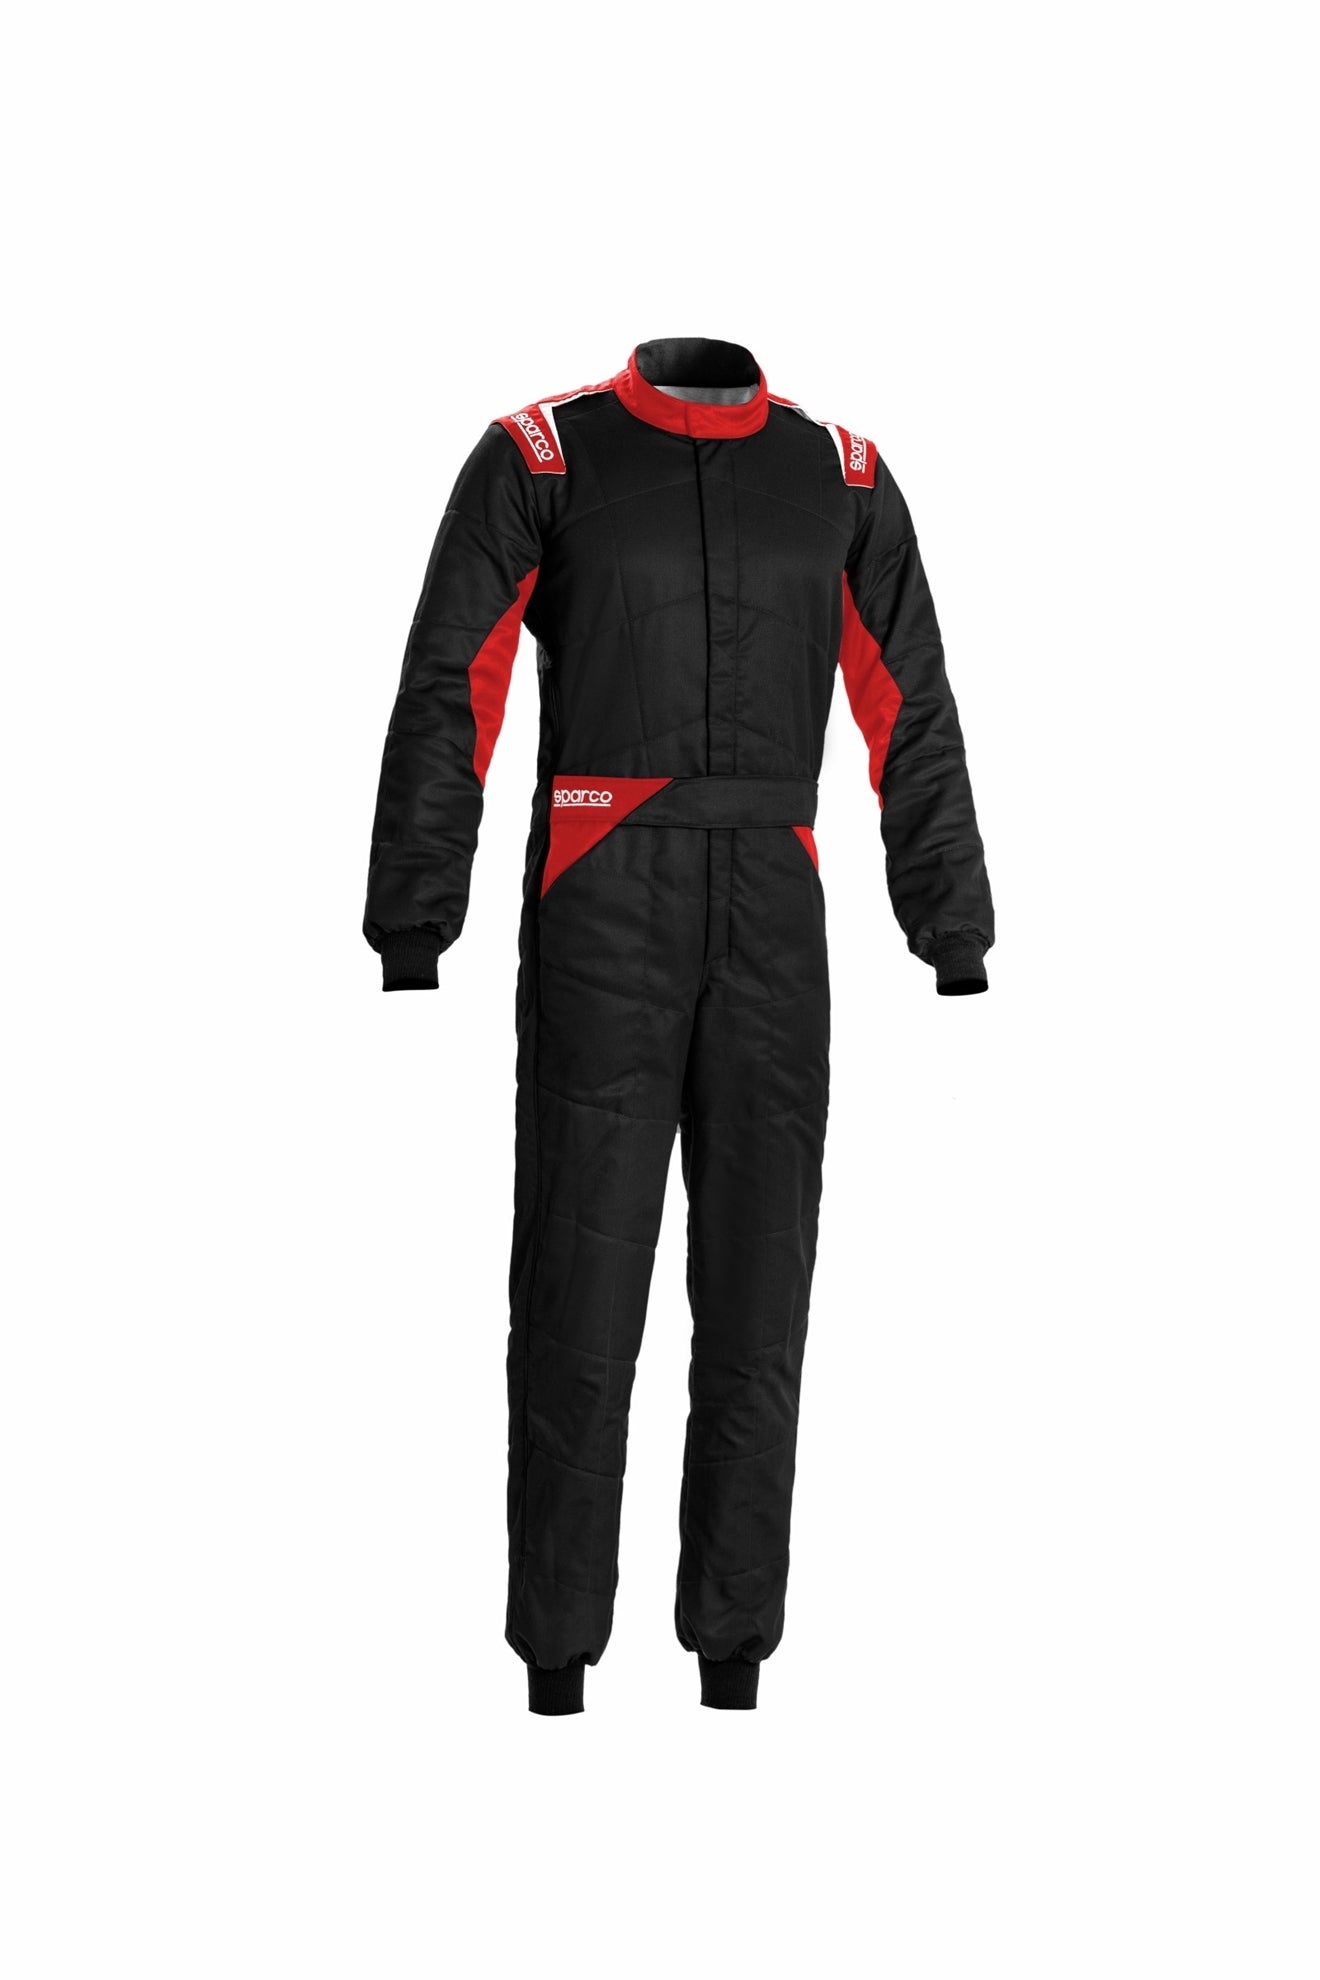 Sparco Sprint (2020) Racing Suit